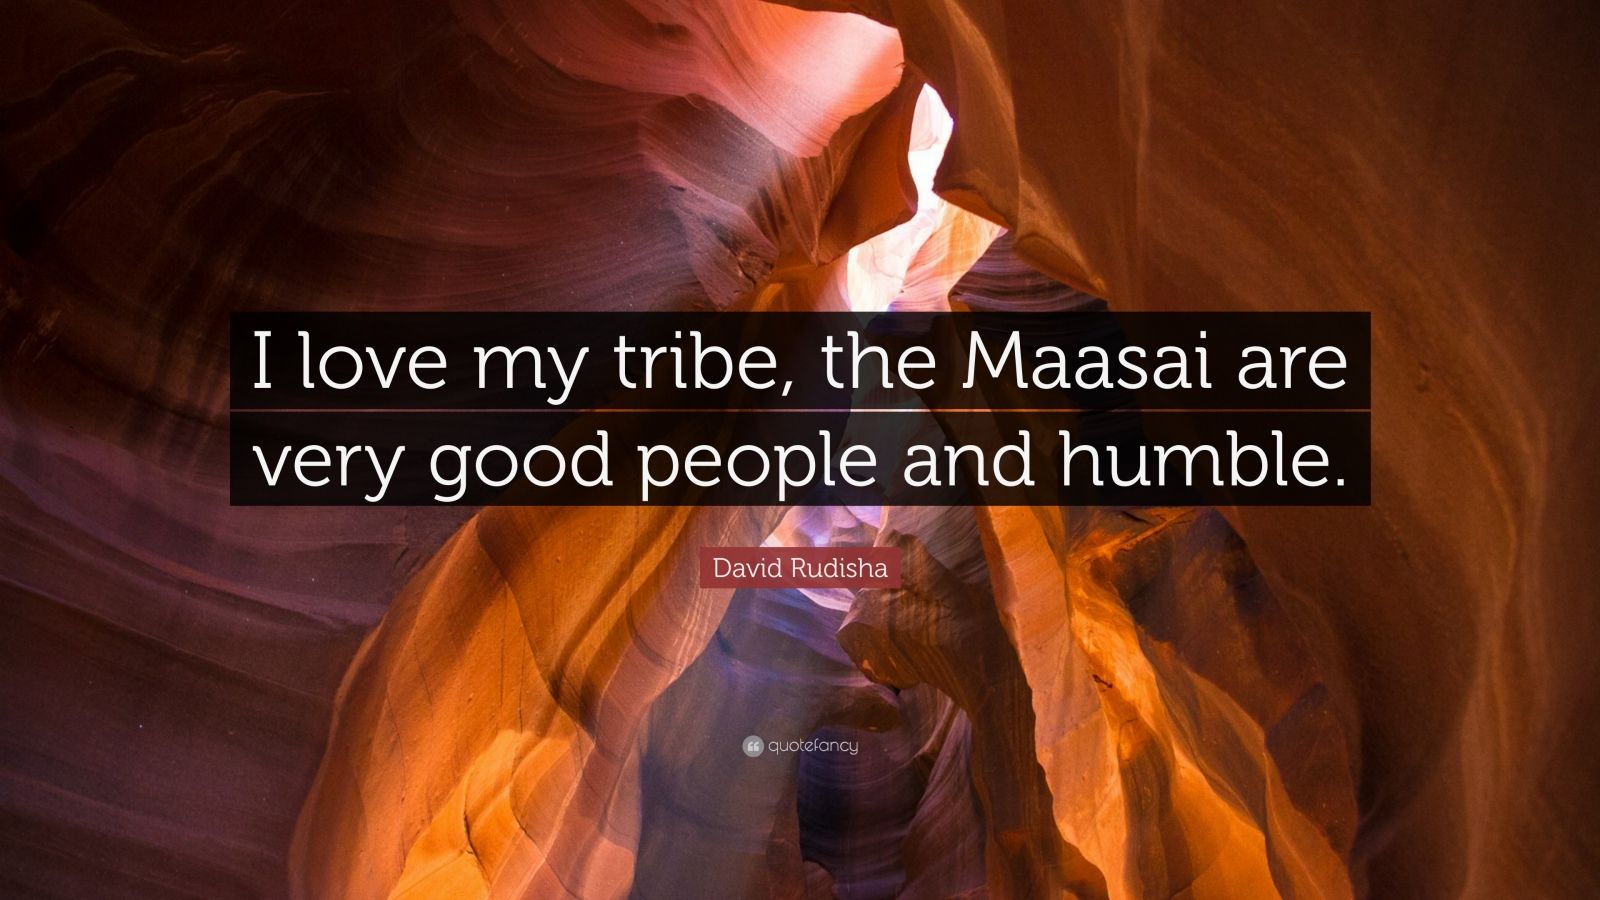 David Rudisha Quote: “I love my tribe, the Maasai are very good people